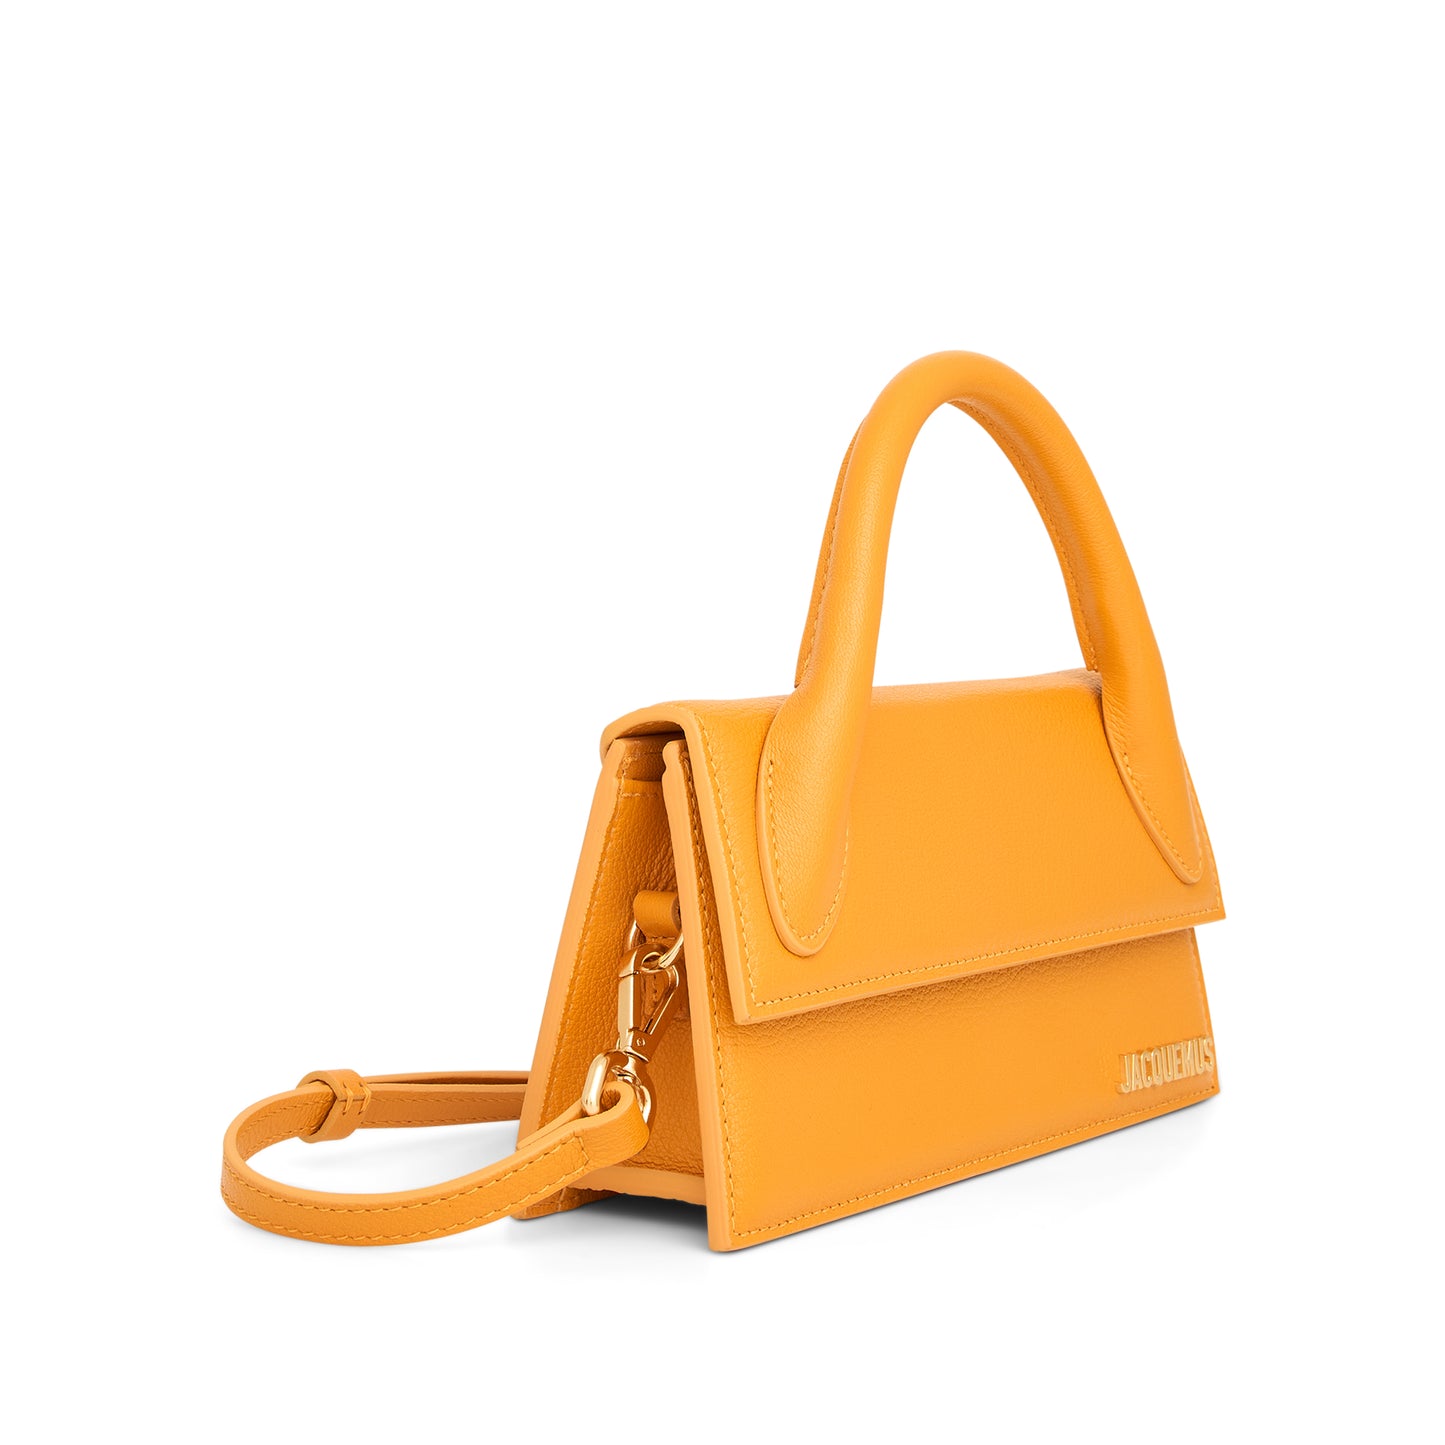 Le Chiquito Long Leather Bag in Dark Orange